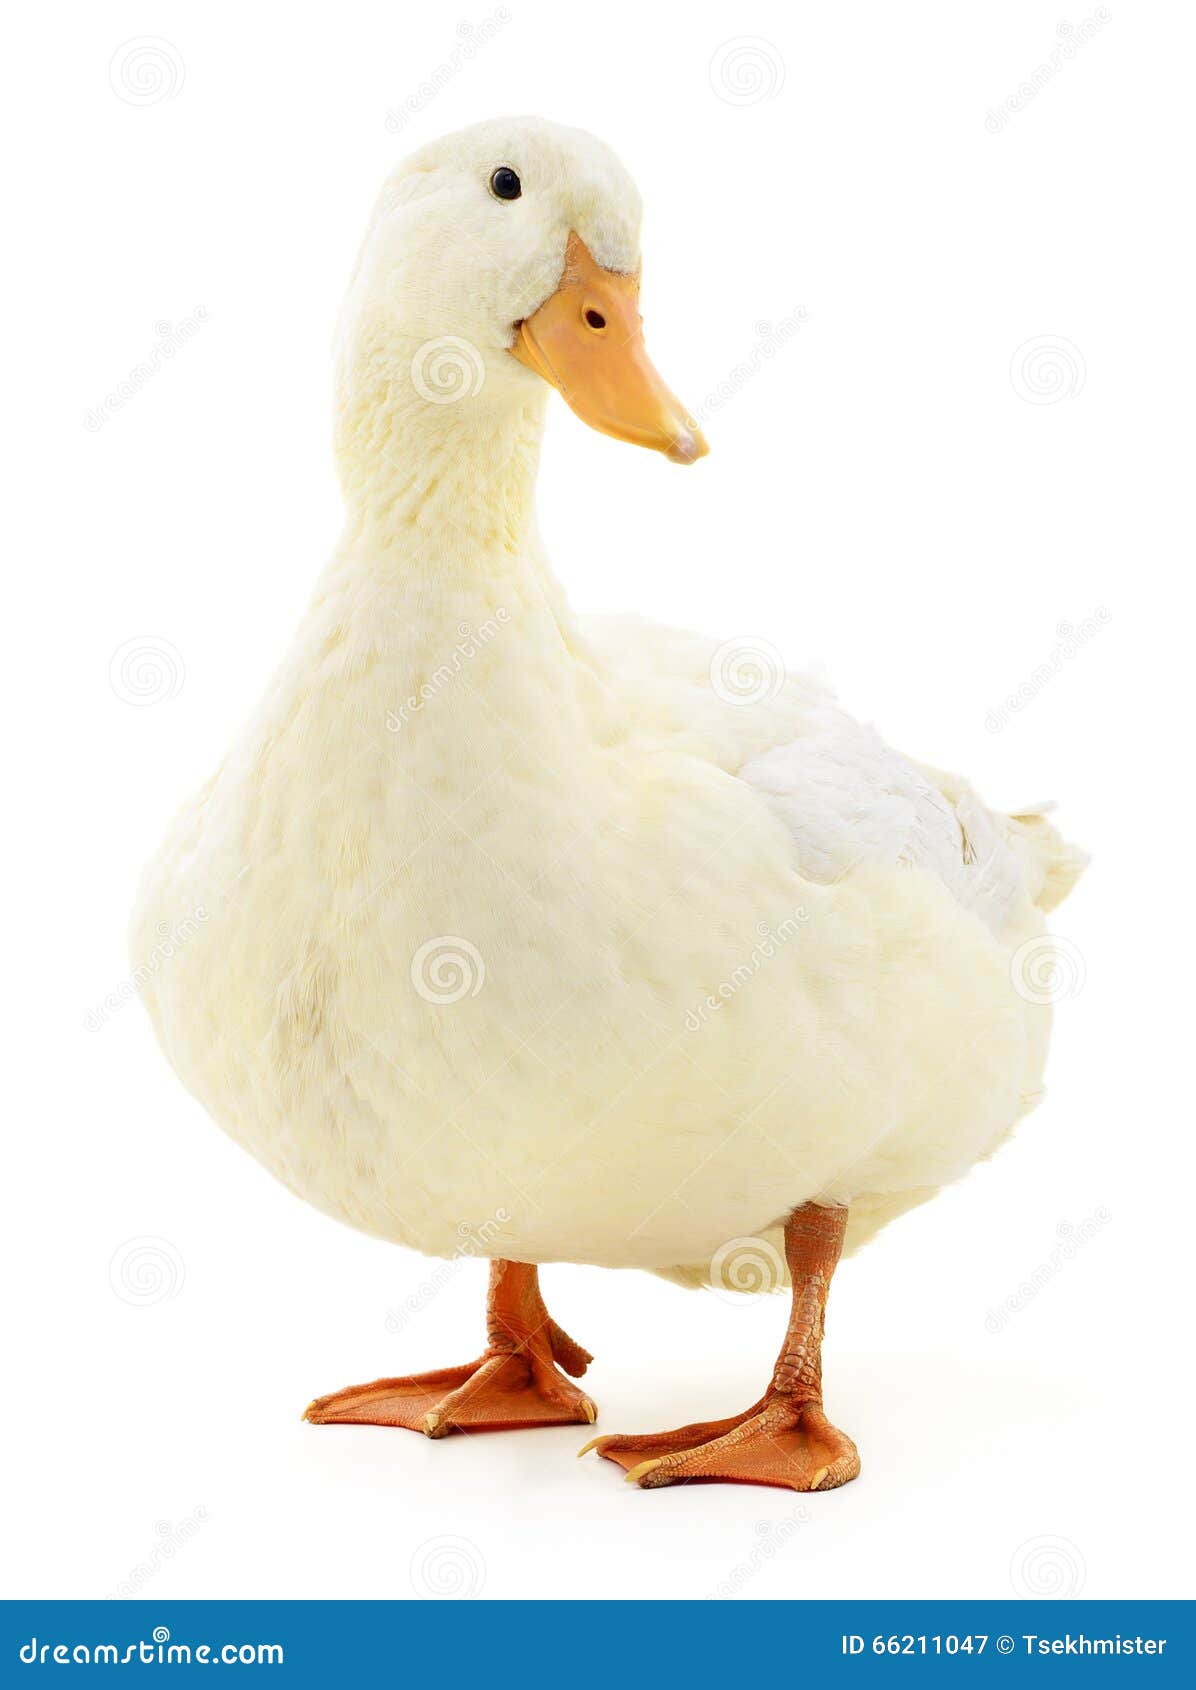 white duck on white.